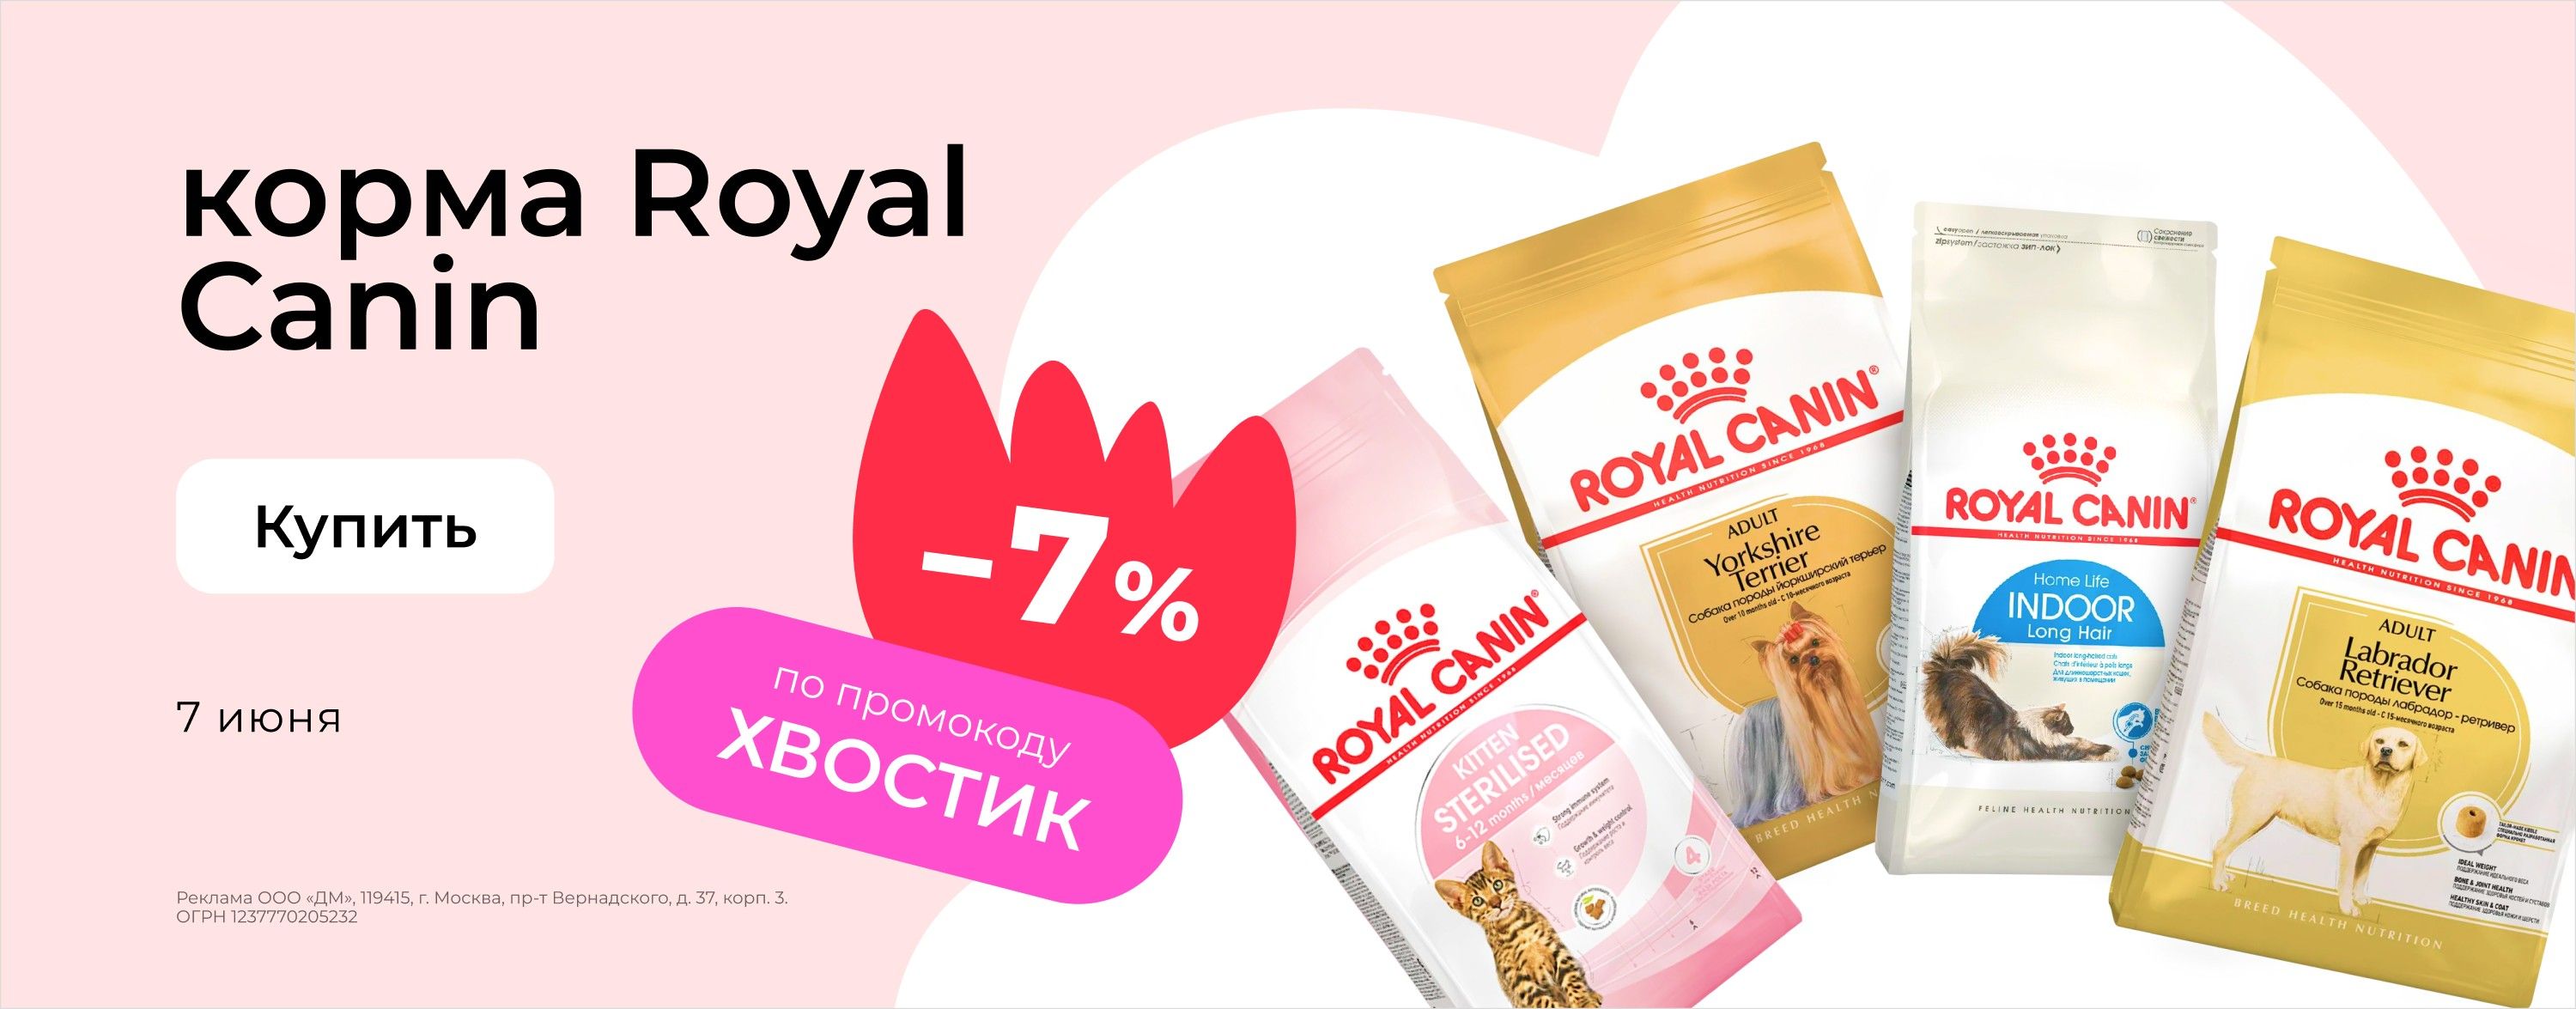 Доп. скидка 7% на корма бренда ROYAL CANIN по промокоду ХВОСТИК_зоо